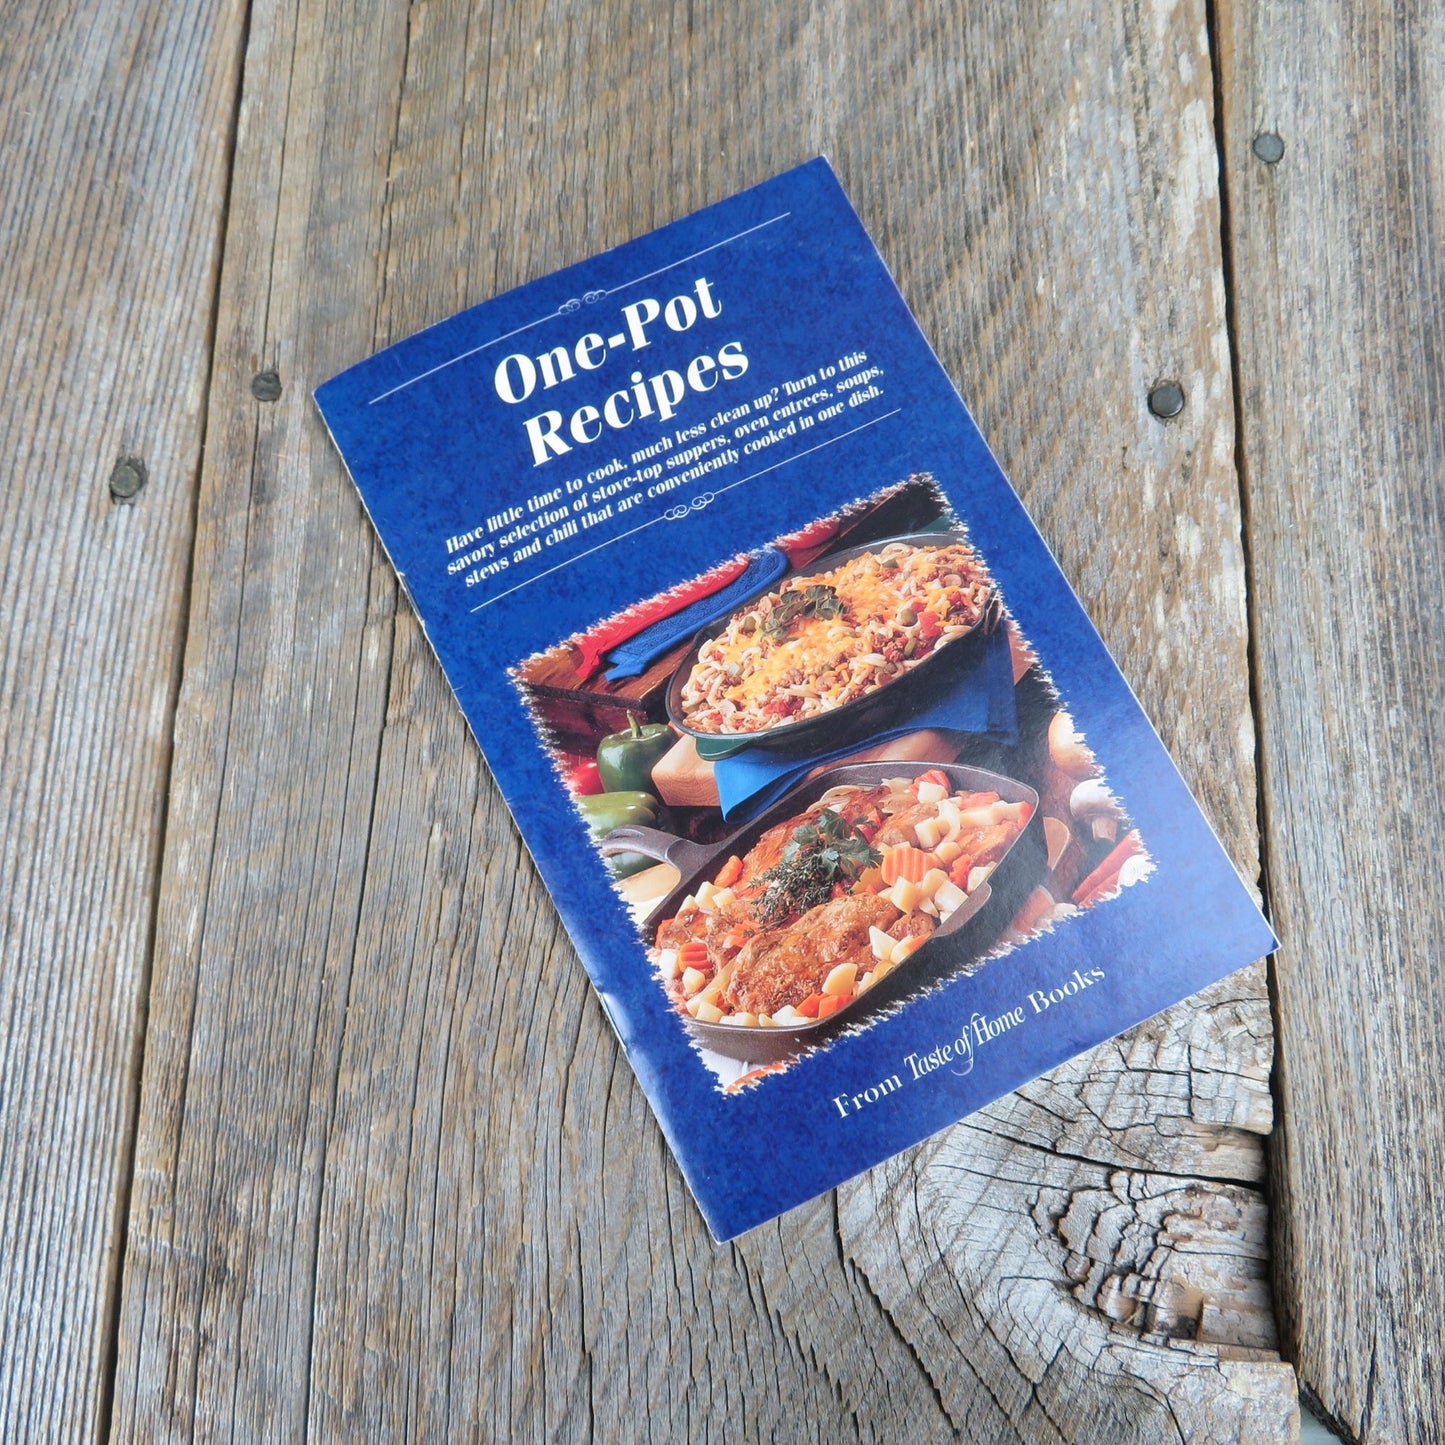 One Pot Recipes Cookbook Taste of Home 2000 Paperback Booklet Casseroles Janaan Cunningham Soups Stews